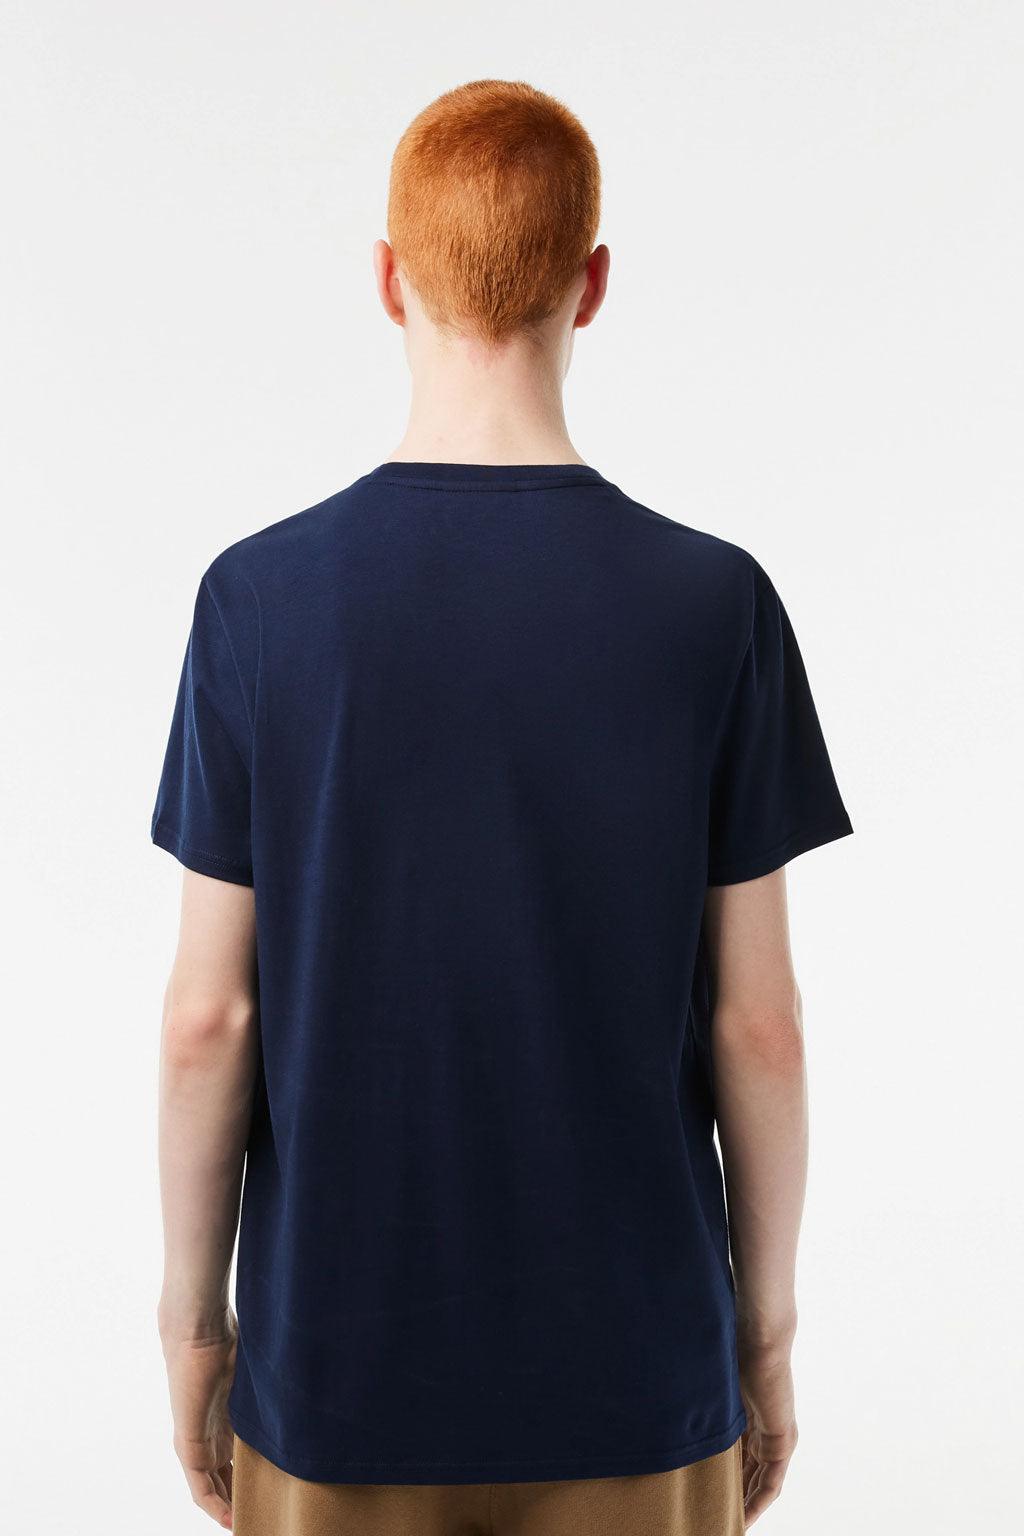 Lacoste t-shirt - Big Boss | the menswear concept